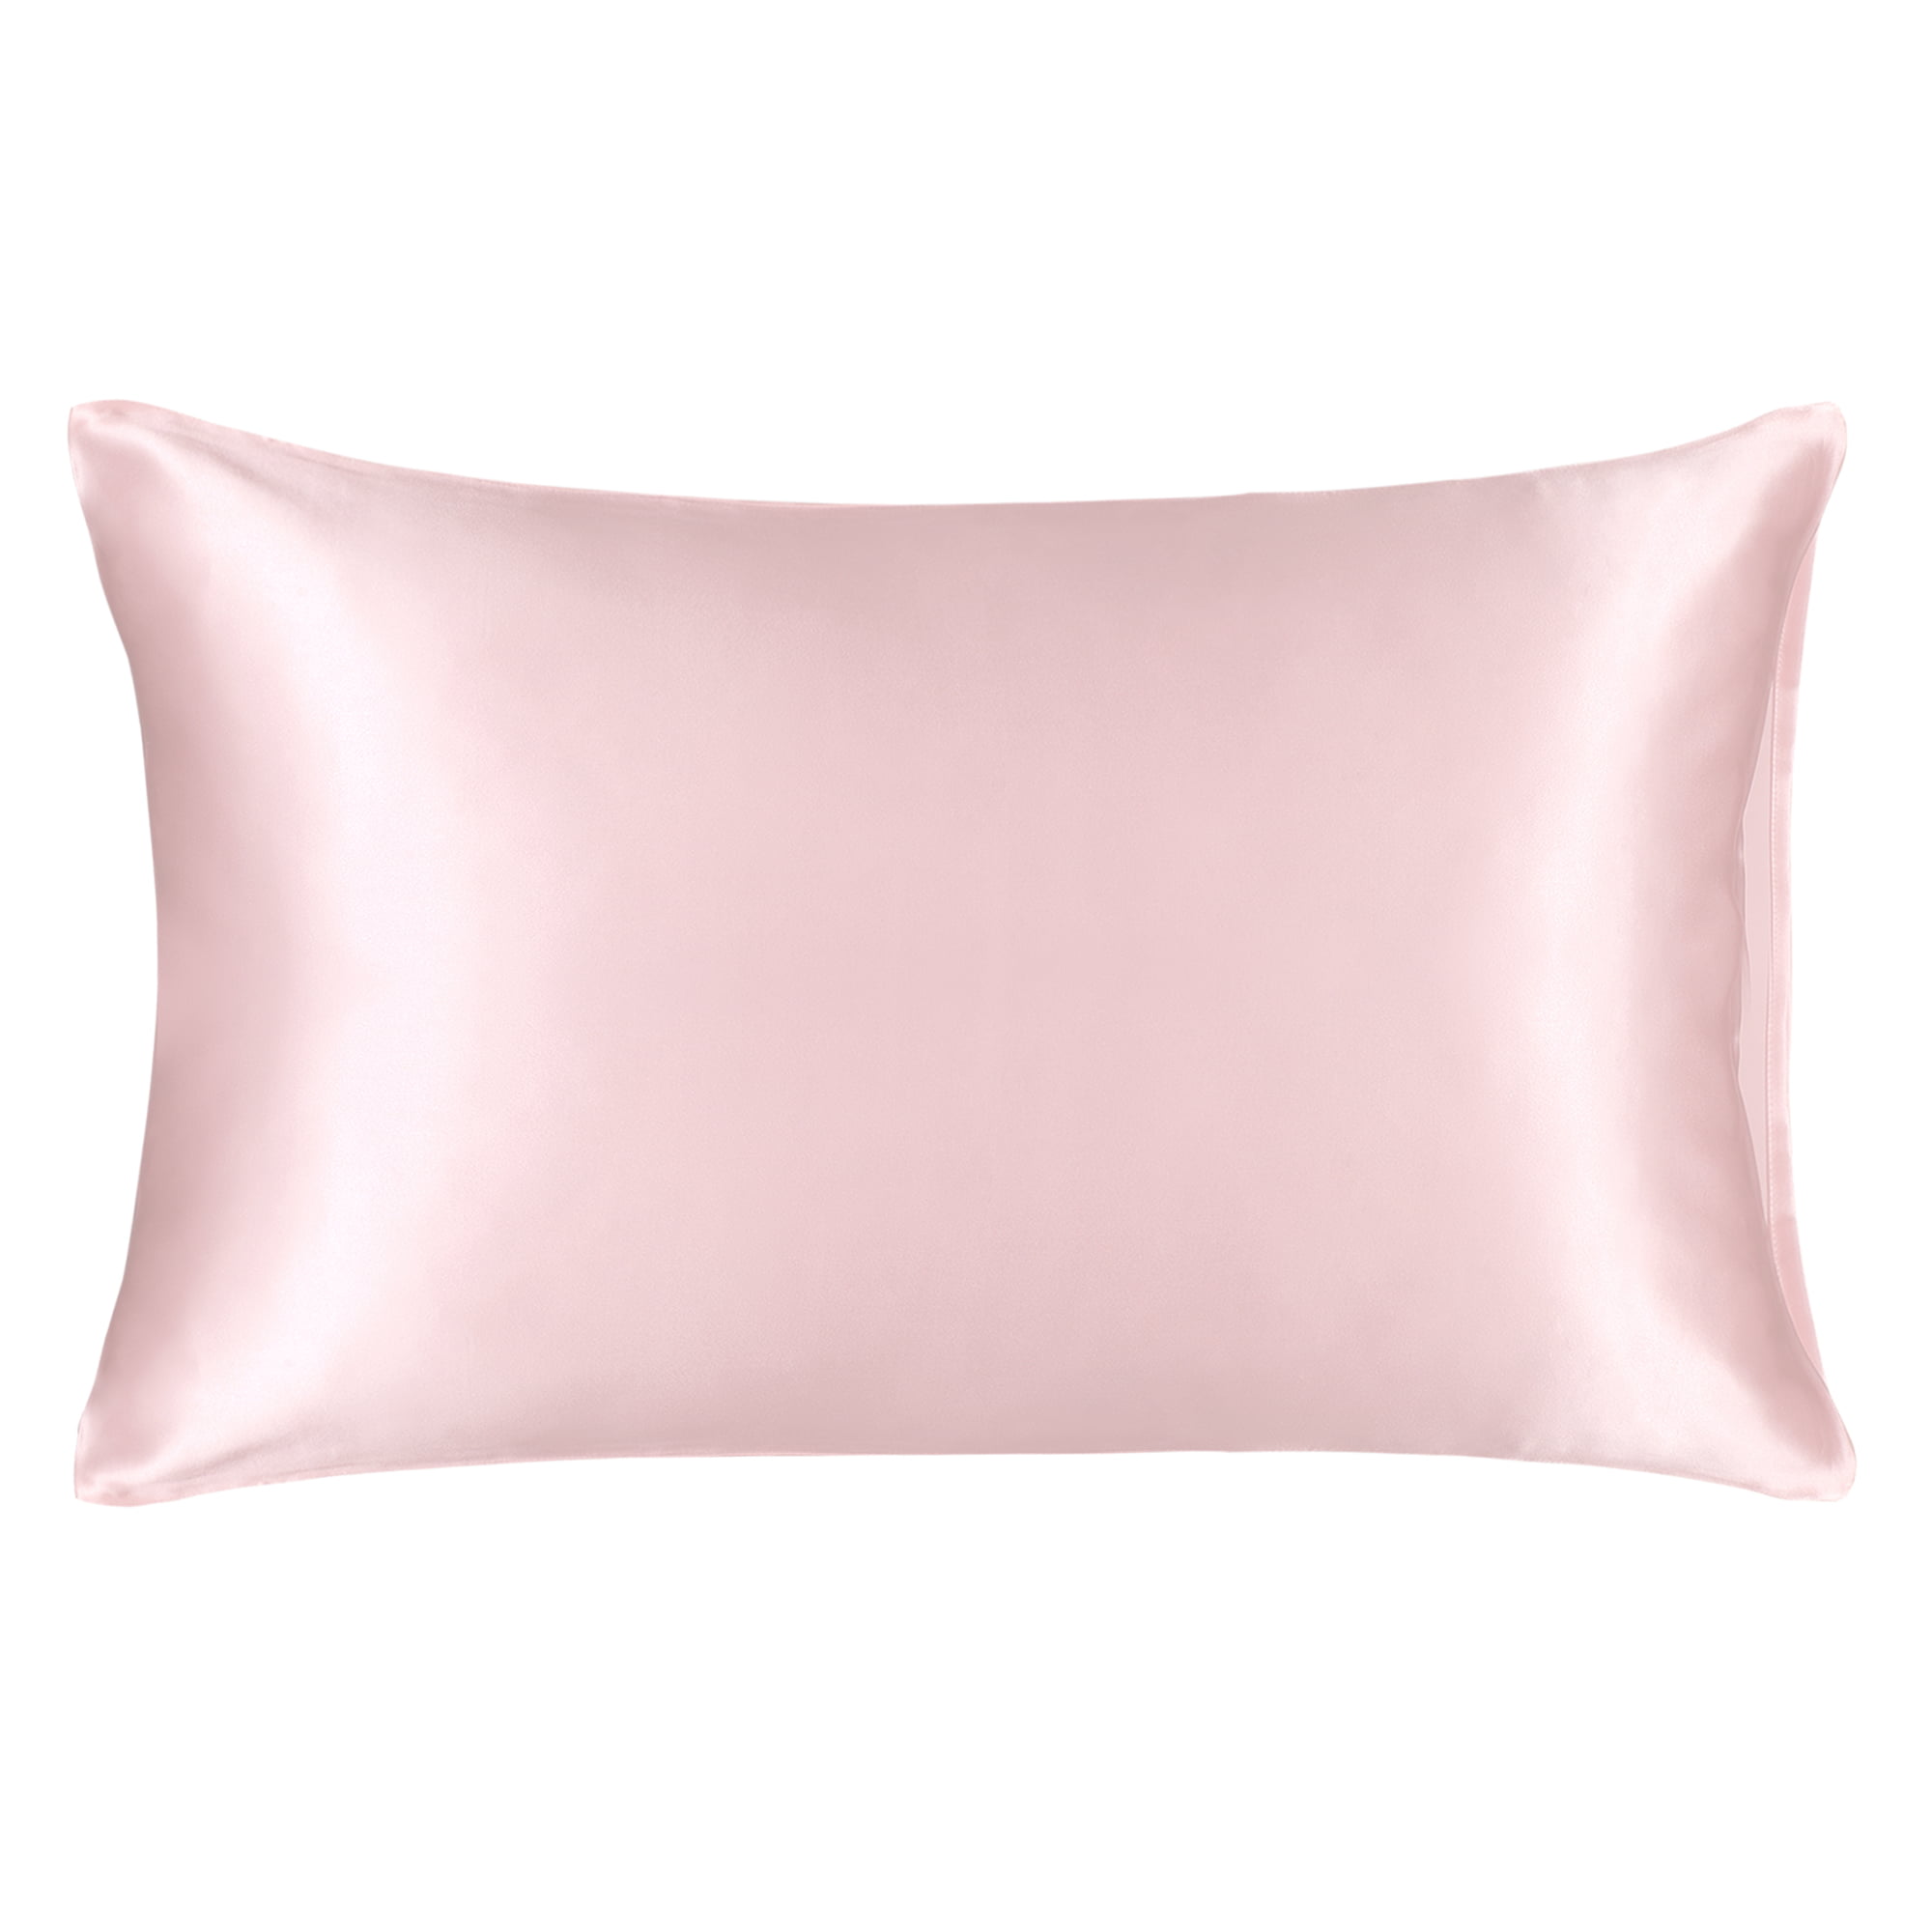 2packs Satin Silk Pillowcase Pillow Case Cover King Queen Standard Cushion Cover 